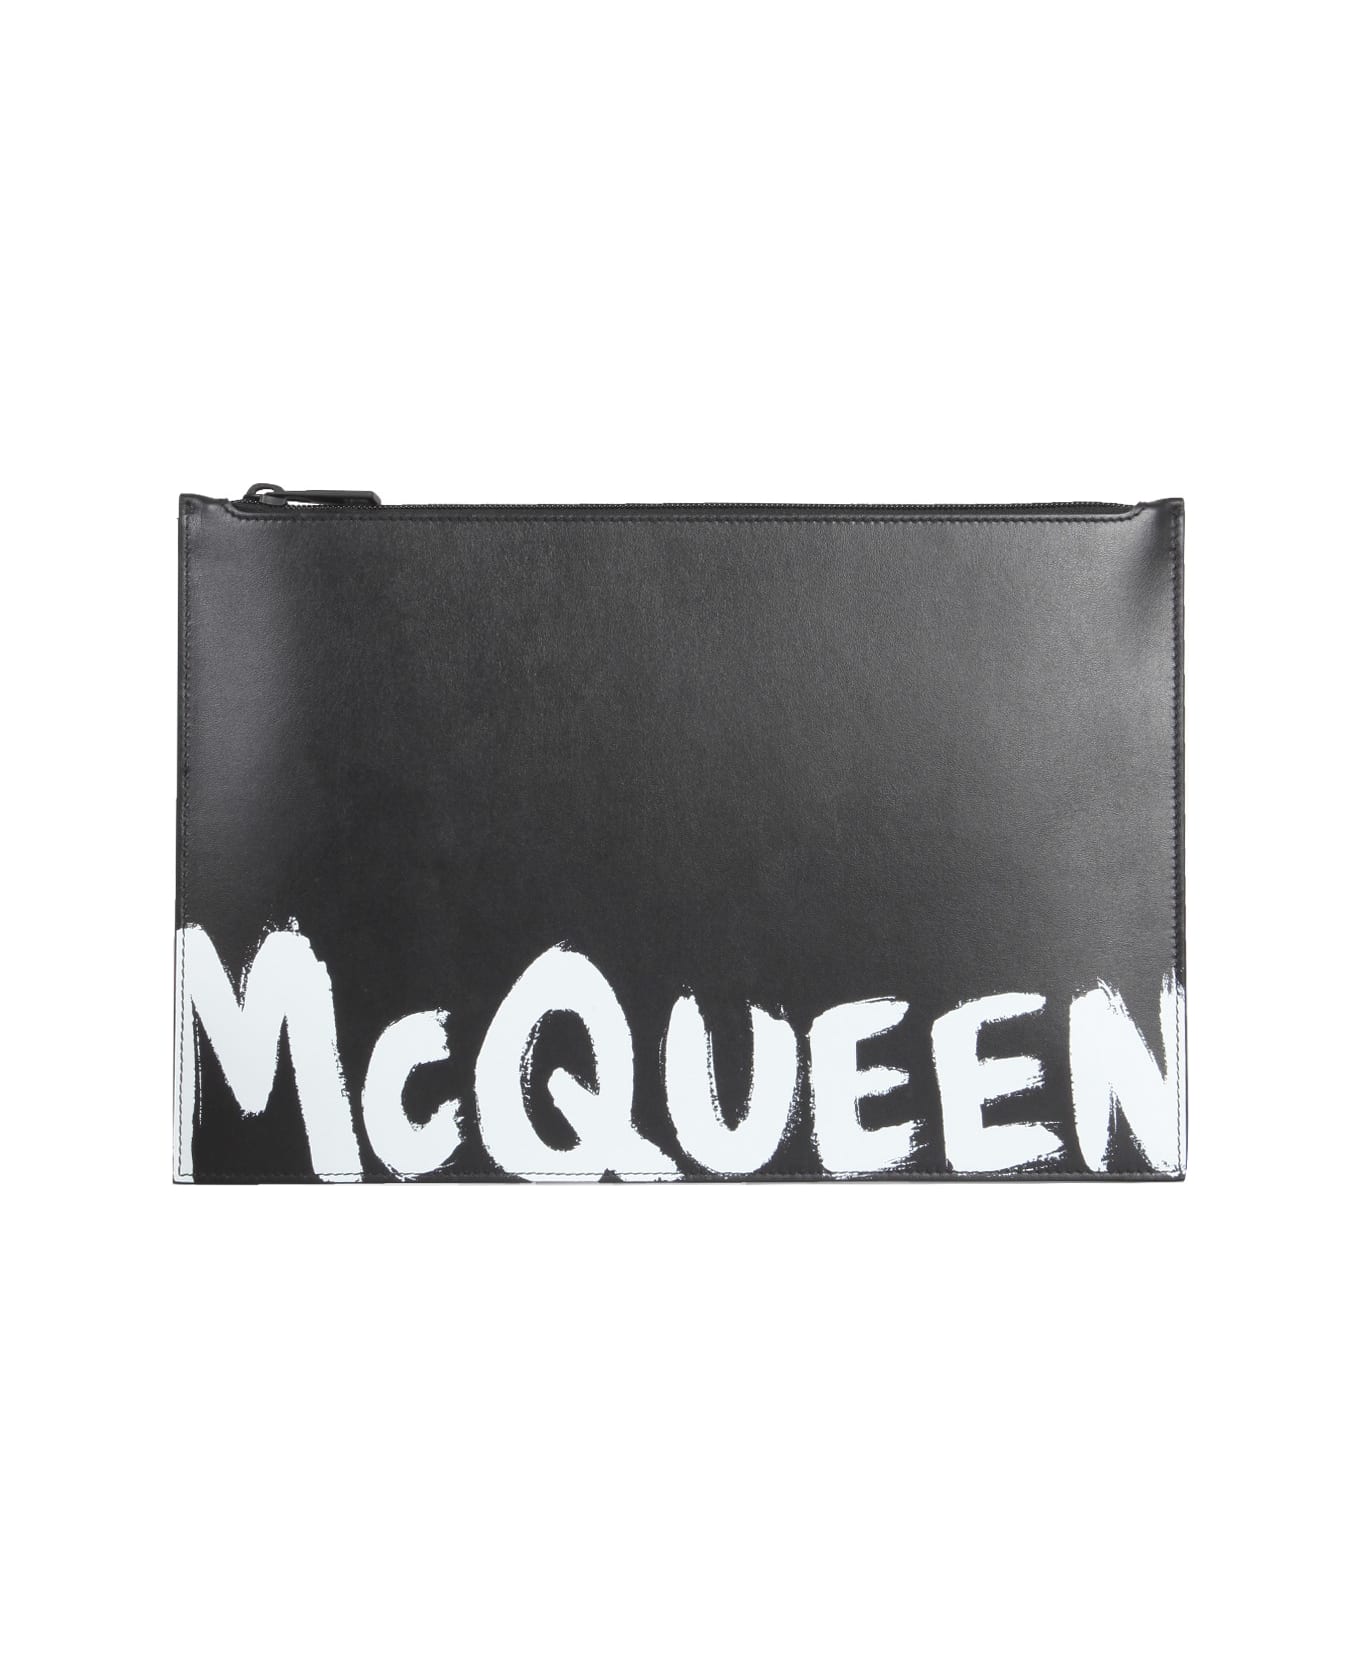 Alexander McQueen Leather Clutch - NERO